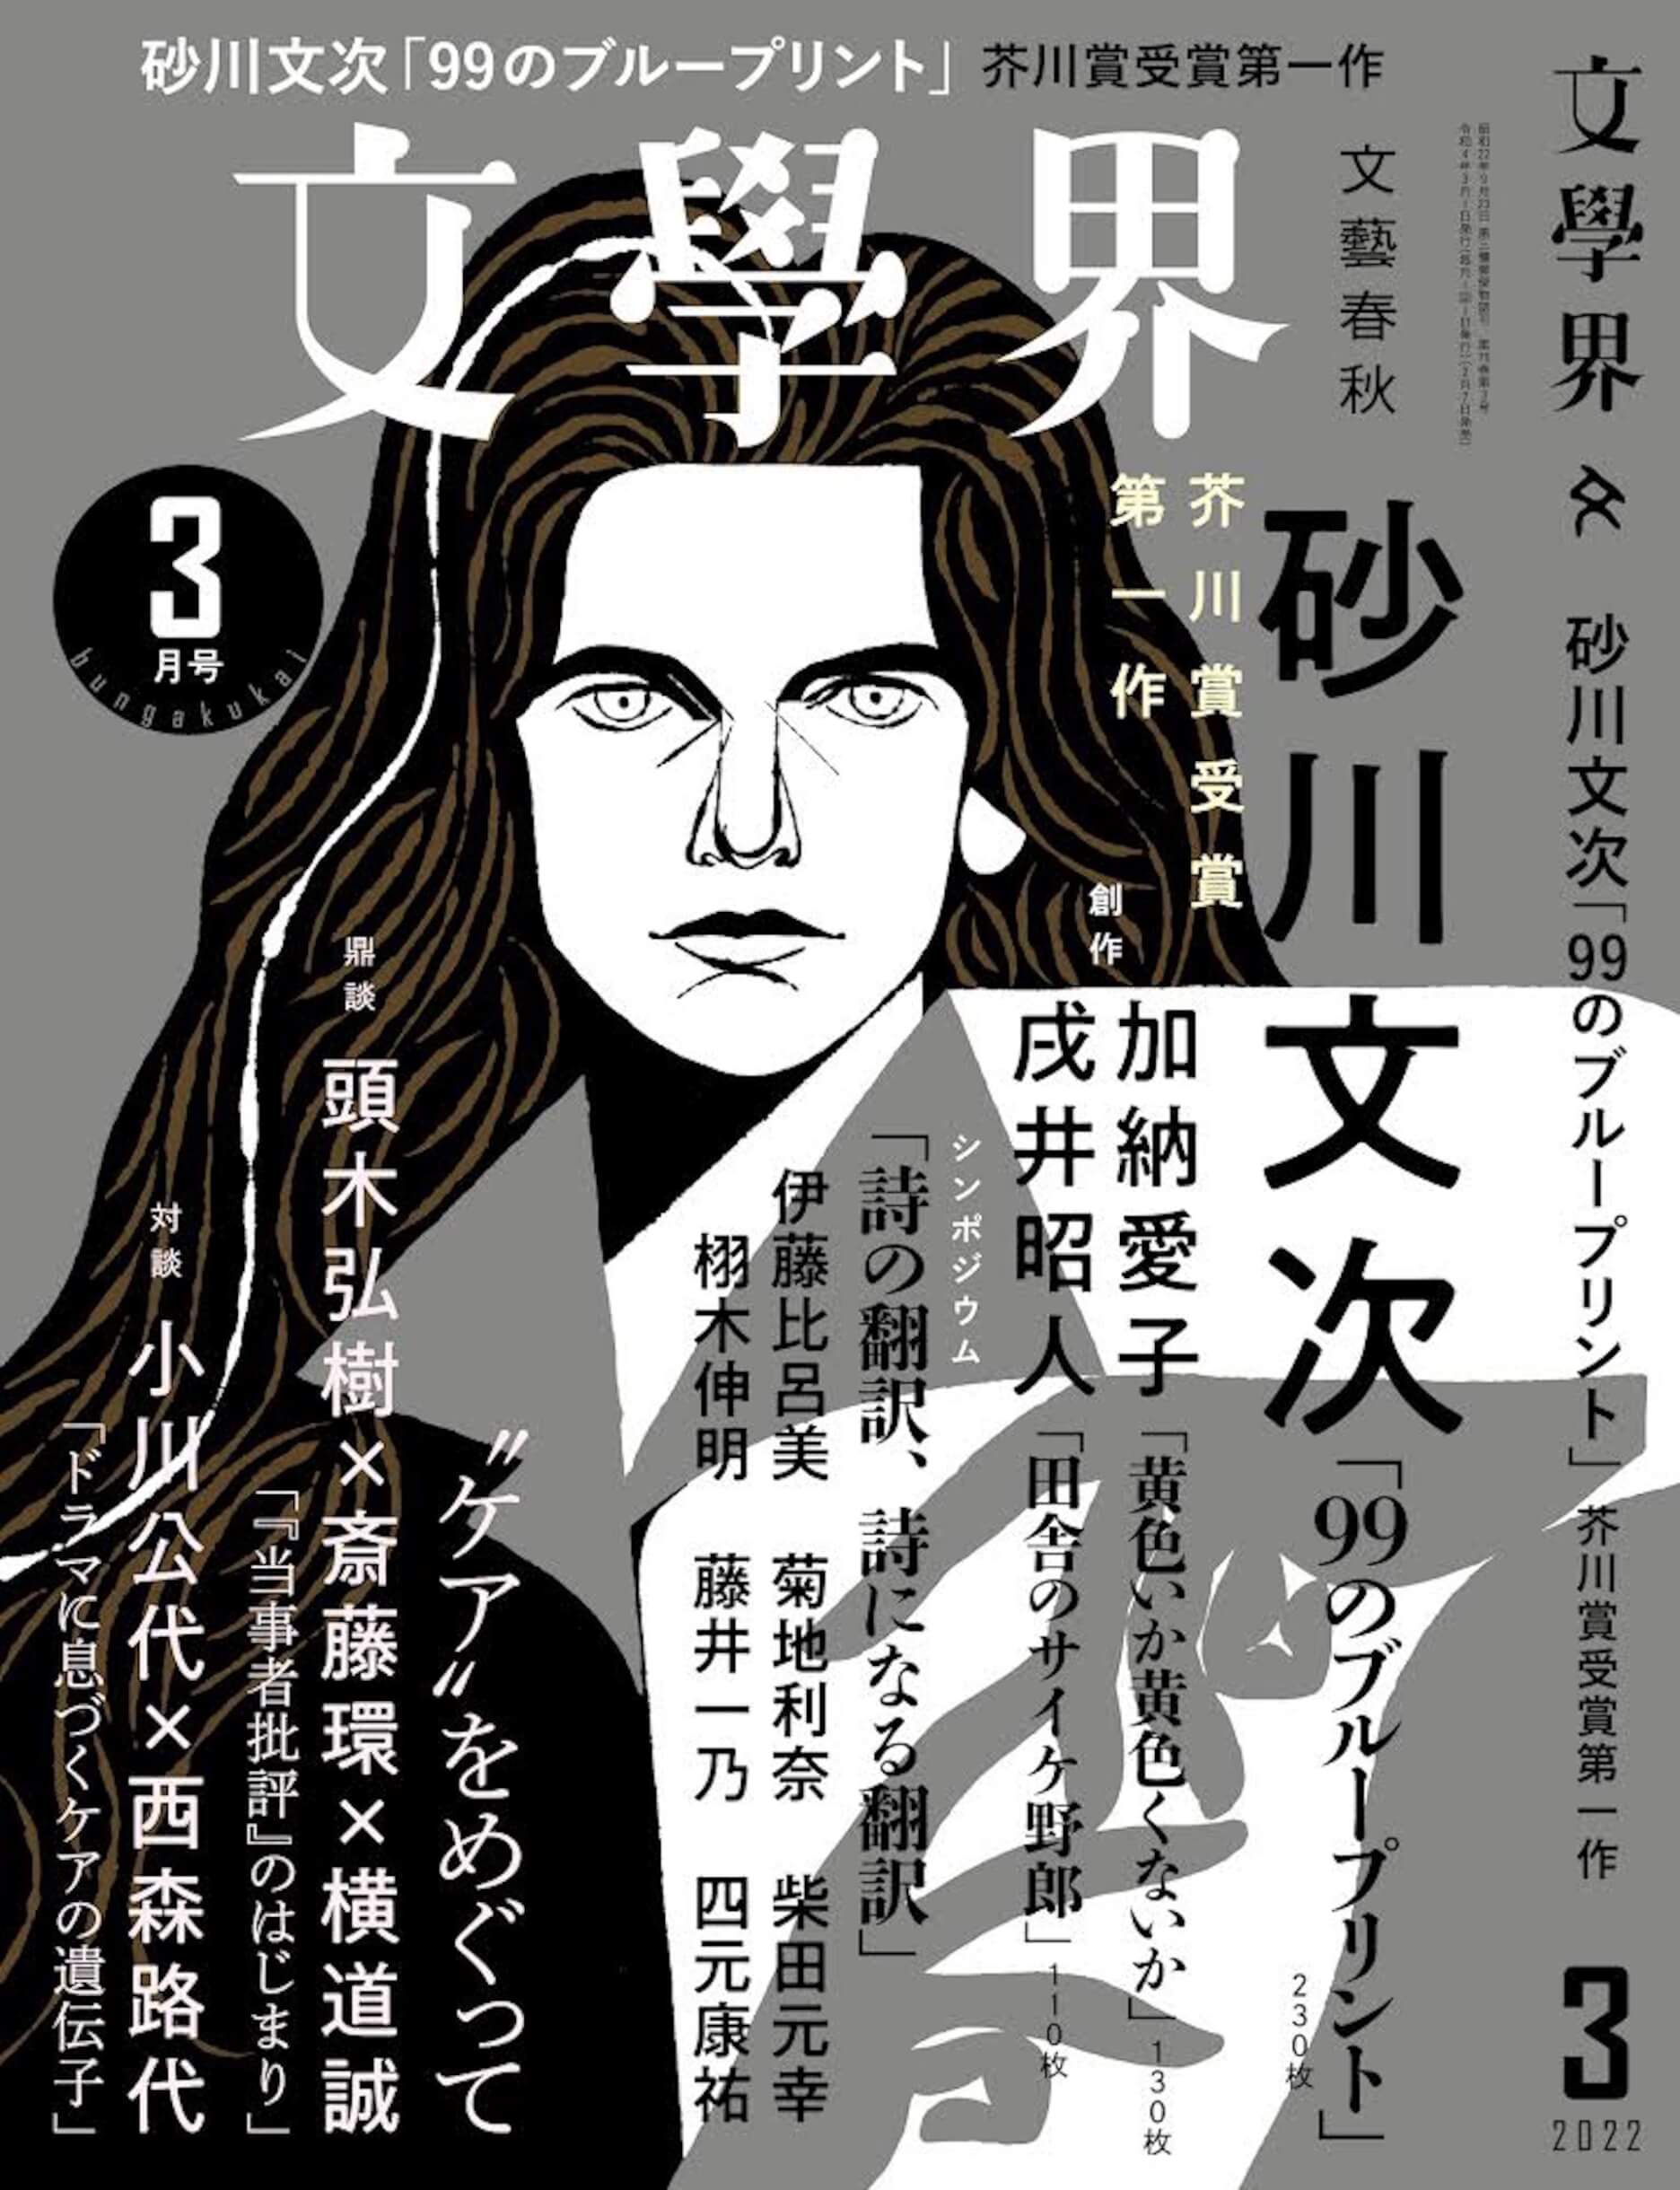 Aマッソ・加納愛子、初の中編小説『黄色いか黄色くないか』を発表、「文學界」で掲載！お笑いライブの現場を題材にした青春小説 art-culture220201-amasso-kano-aiko-2